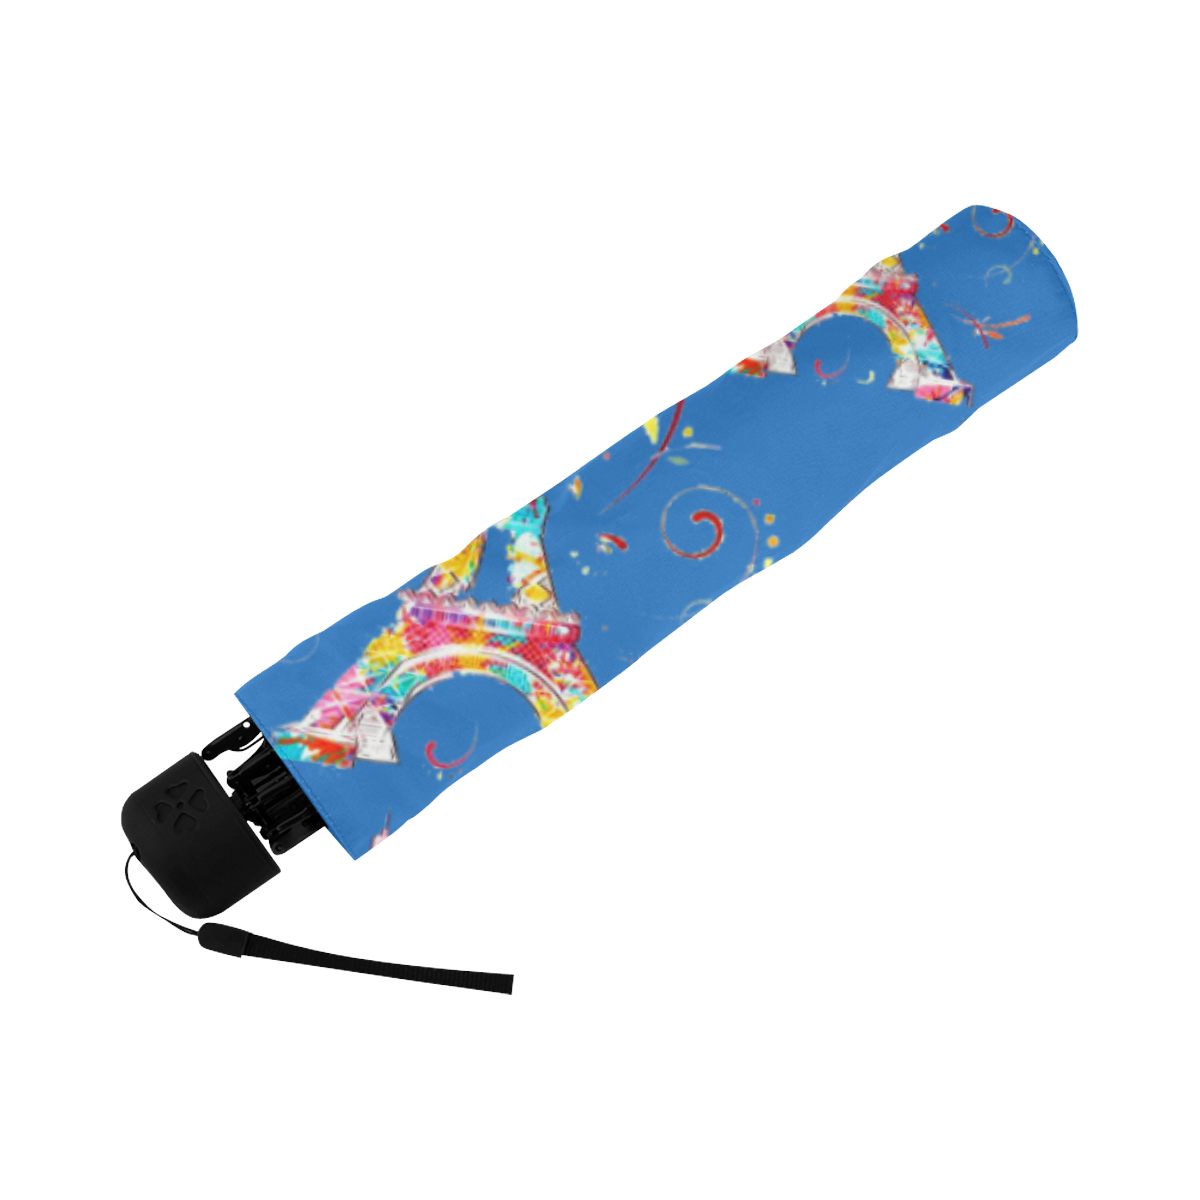 Paris Lights Anti-UV Foldable Umbrella (Underside Printing) (U07)